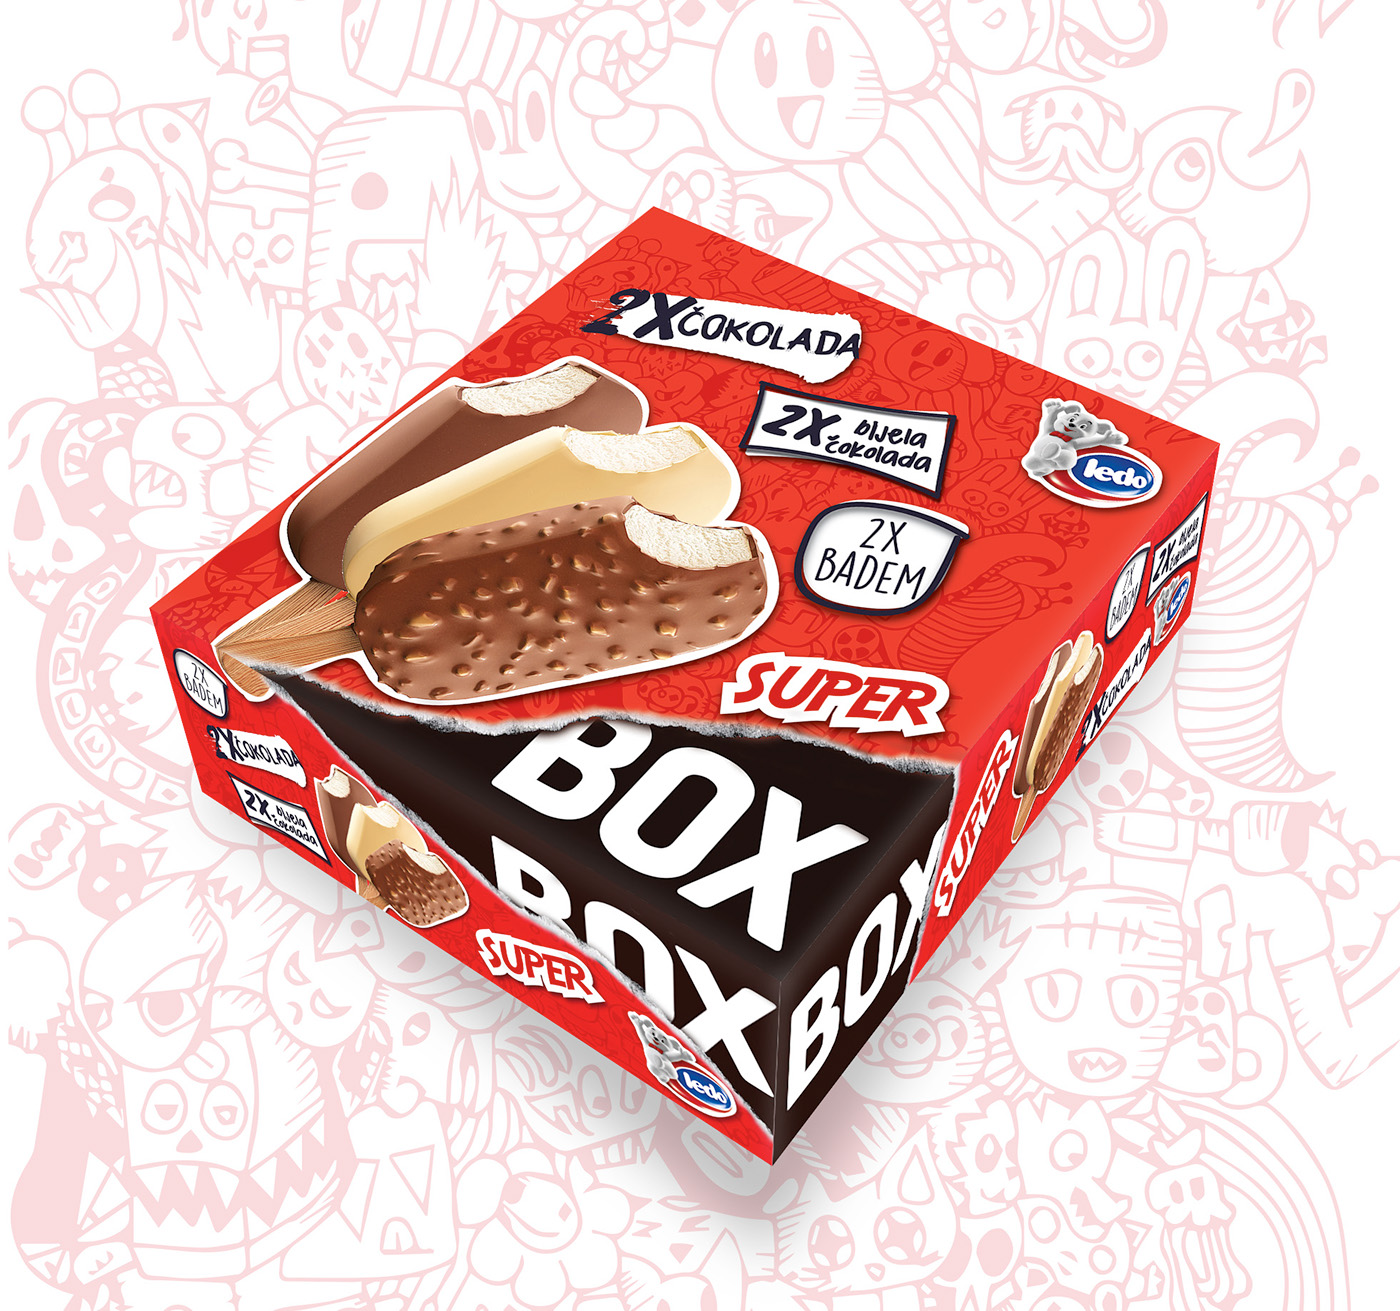 Packaging design industrial design  Food  doodle ice cream multipack